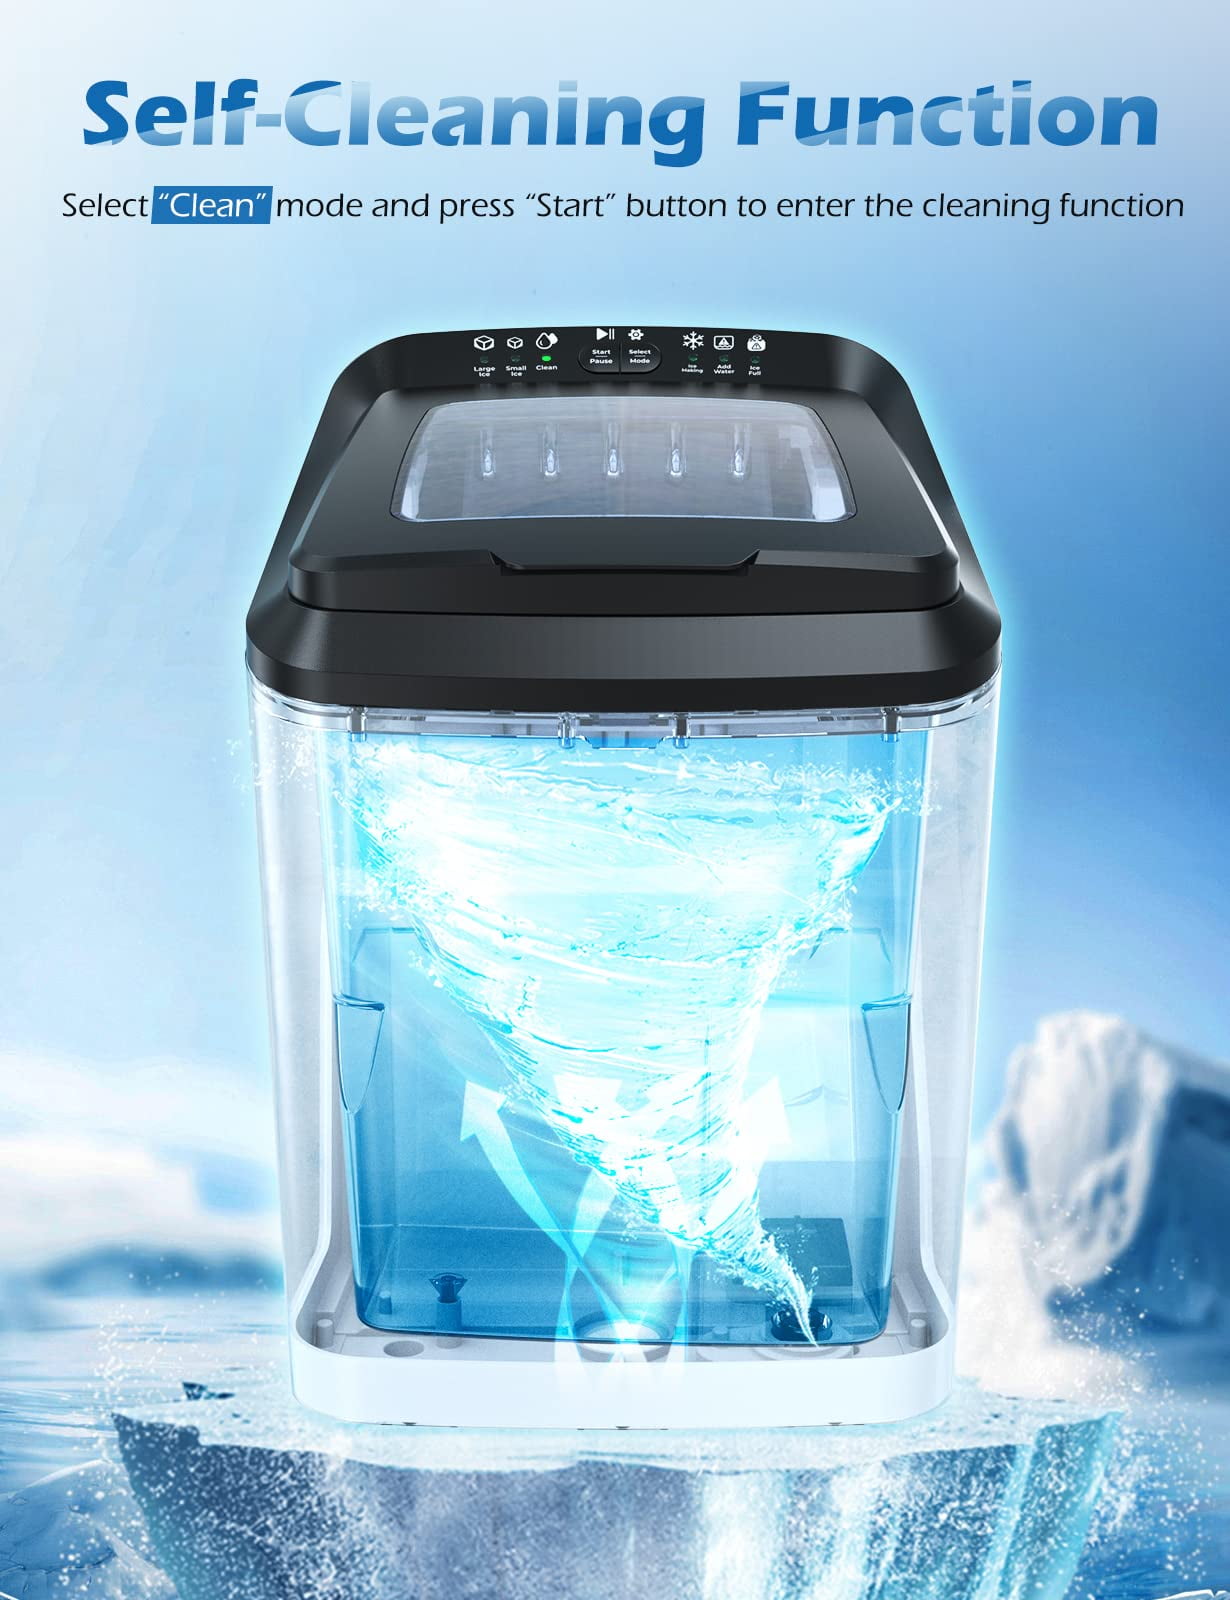 Freezimer IM2200-UL Portable Ice Maker Machine Countertop 2 Size Ice Cubes